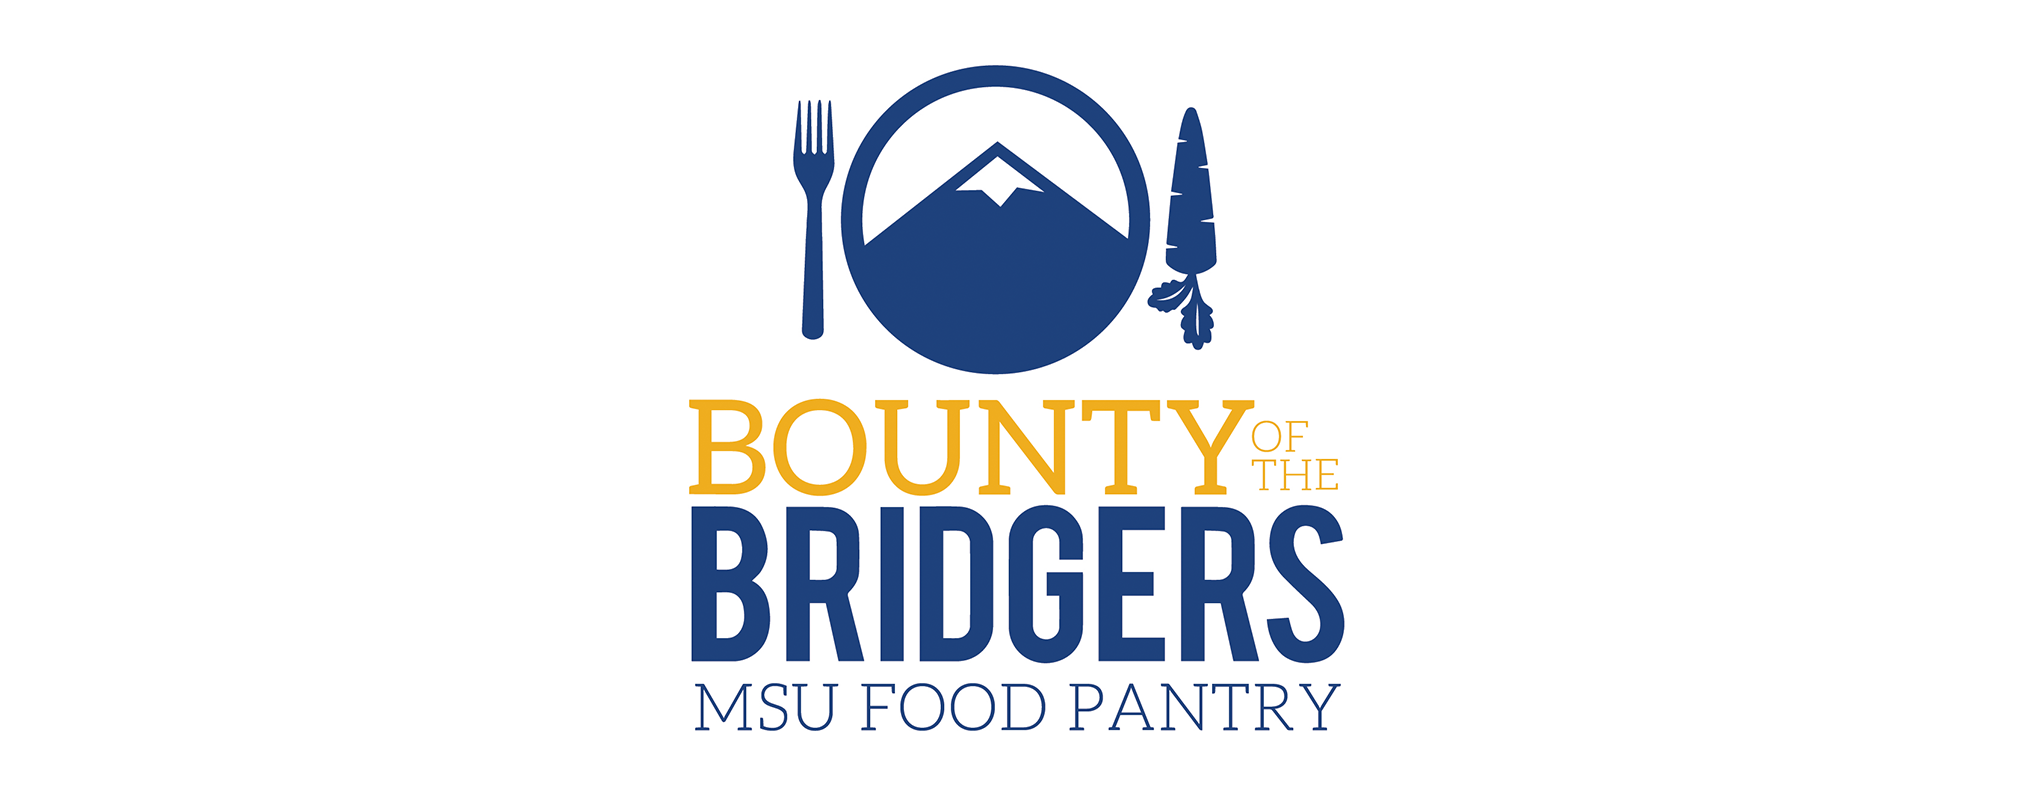 Bounty of the Bridgers MSU student food pantry